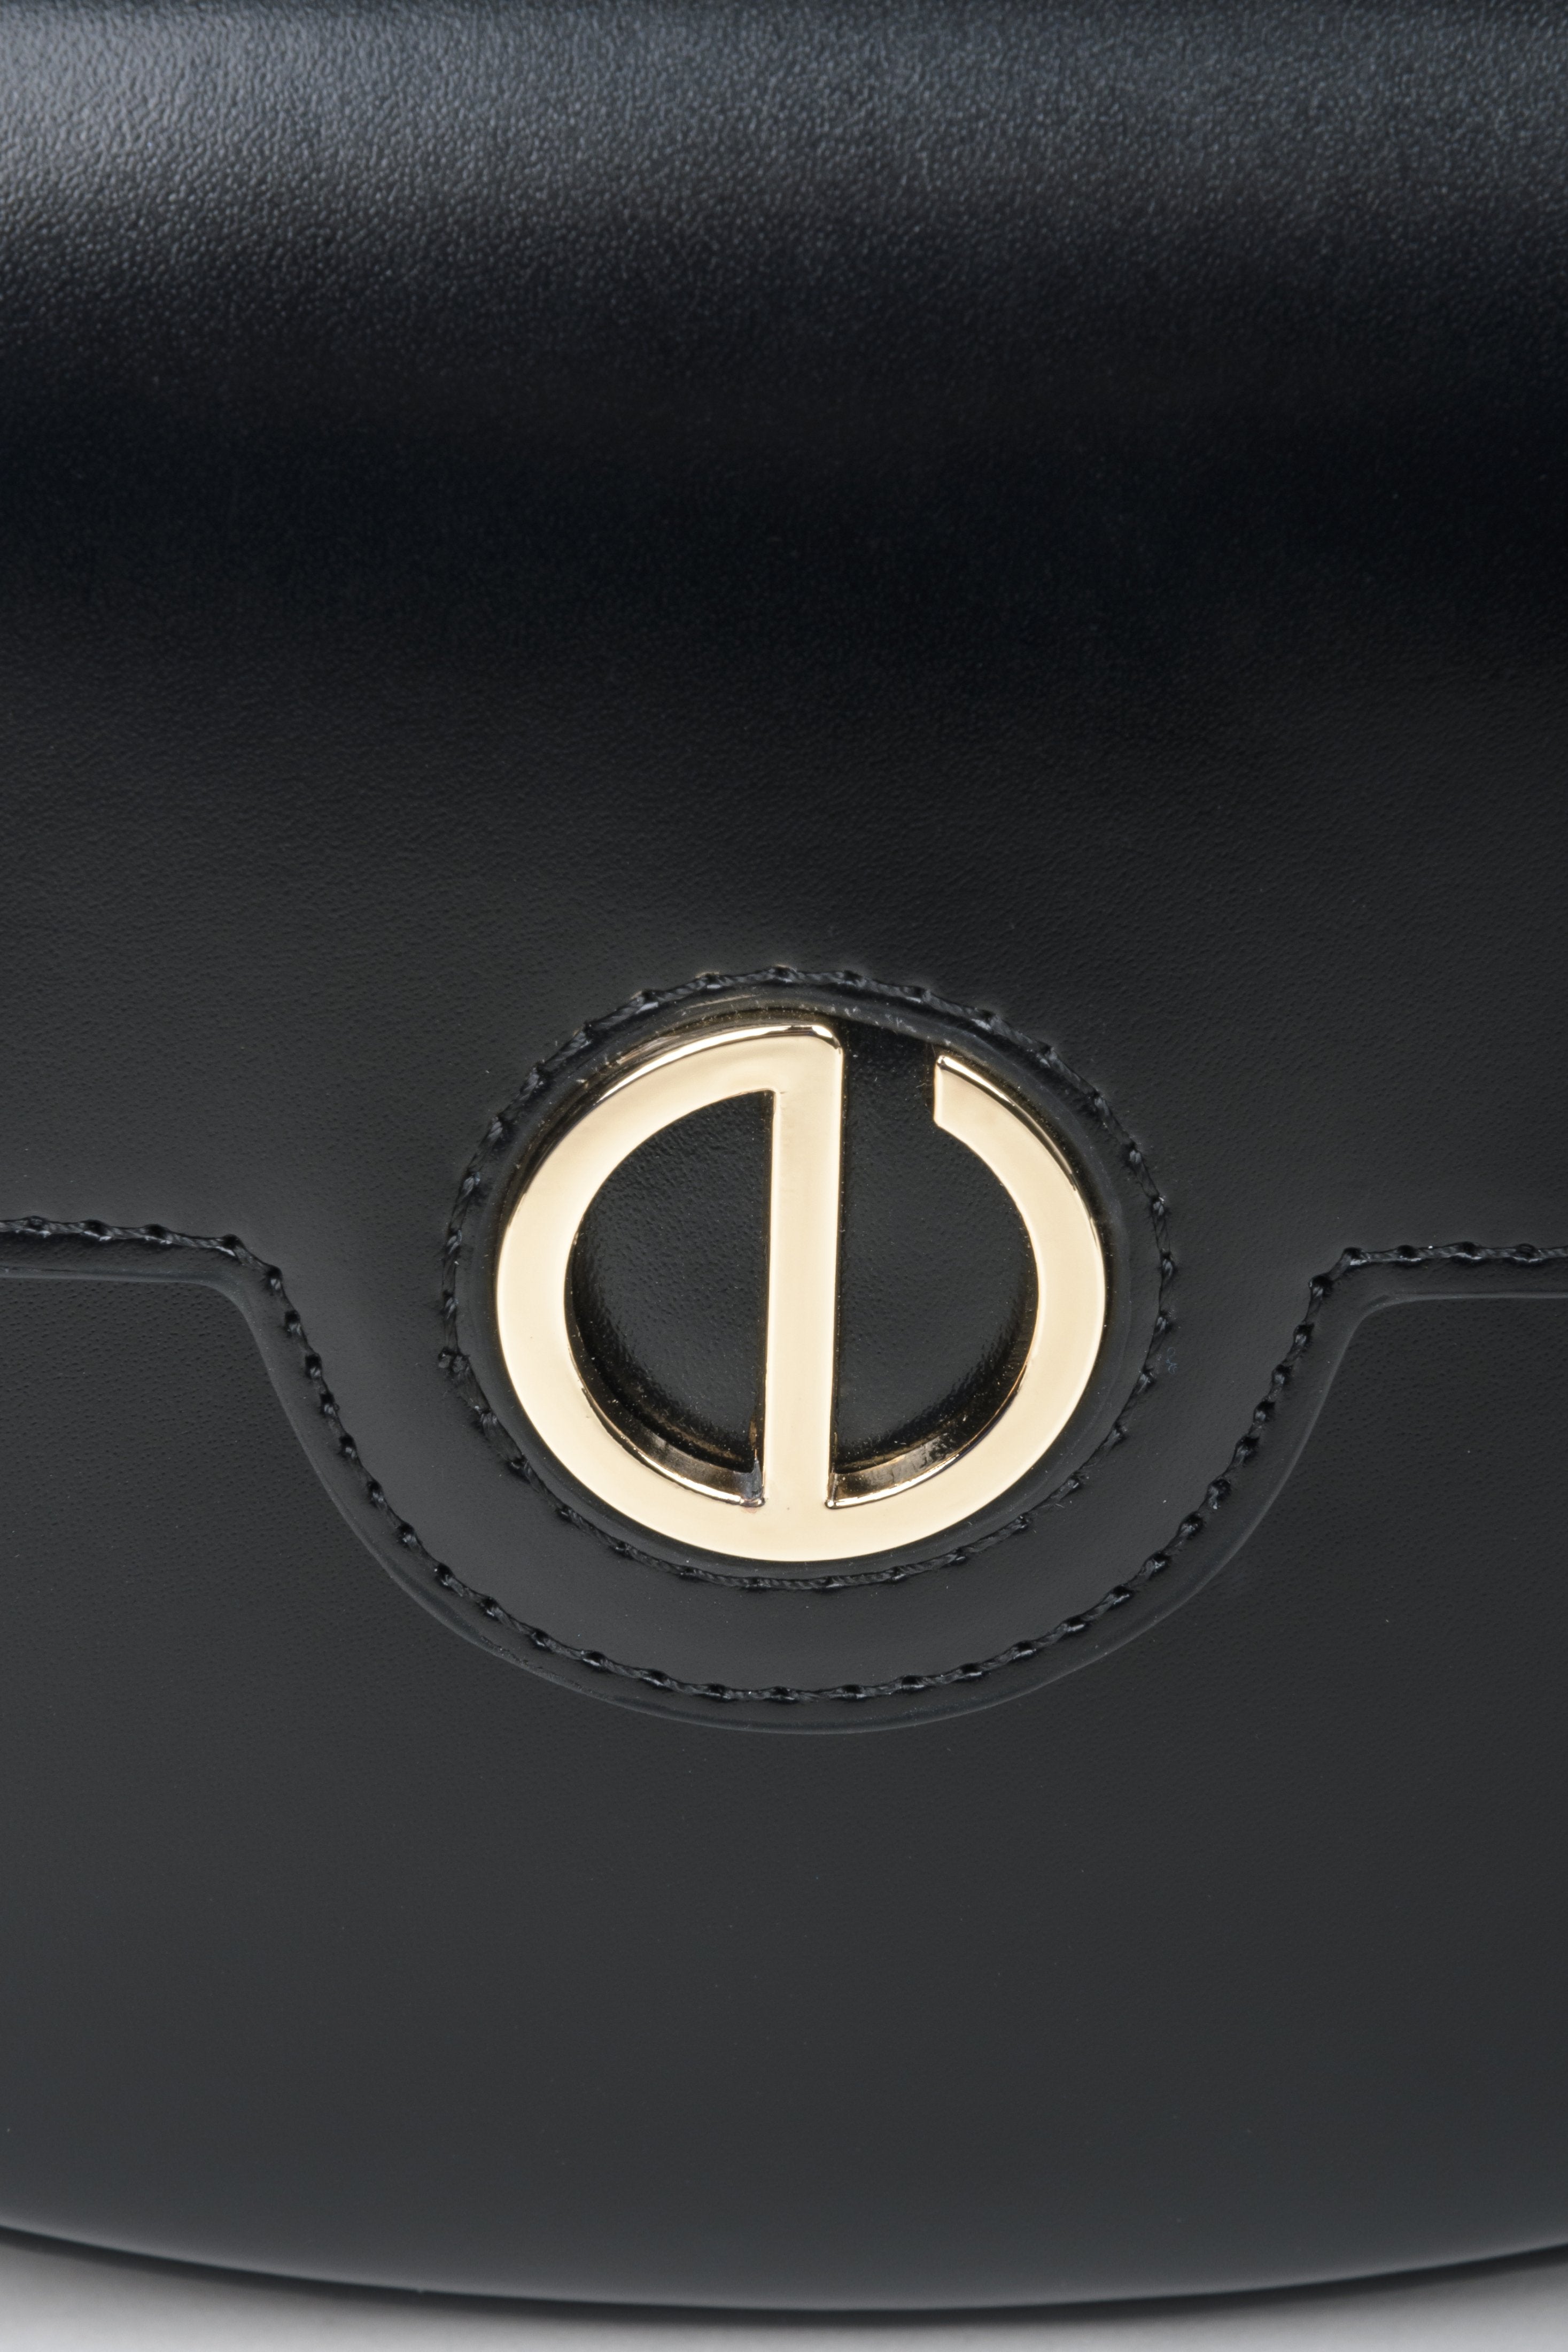 Estro women's black shoulder bag - close-up on the details.